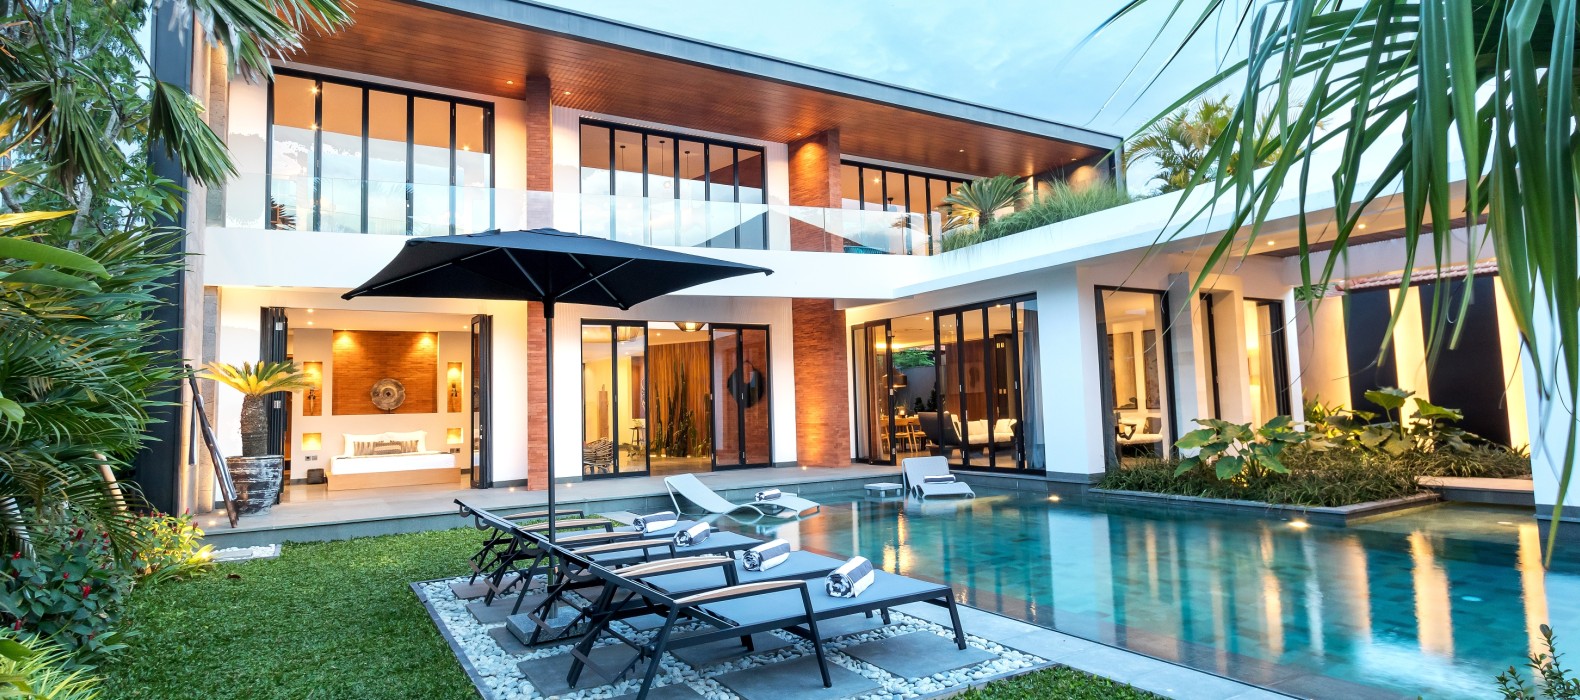 Sun loungers vioew of Villa Castil de Udara in Bali